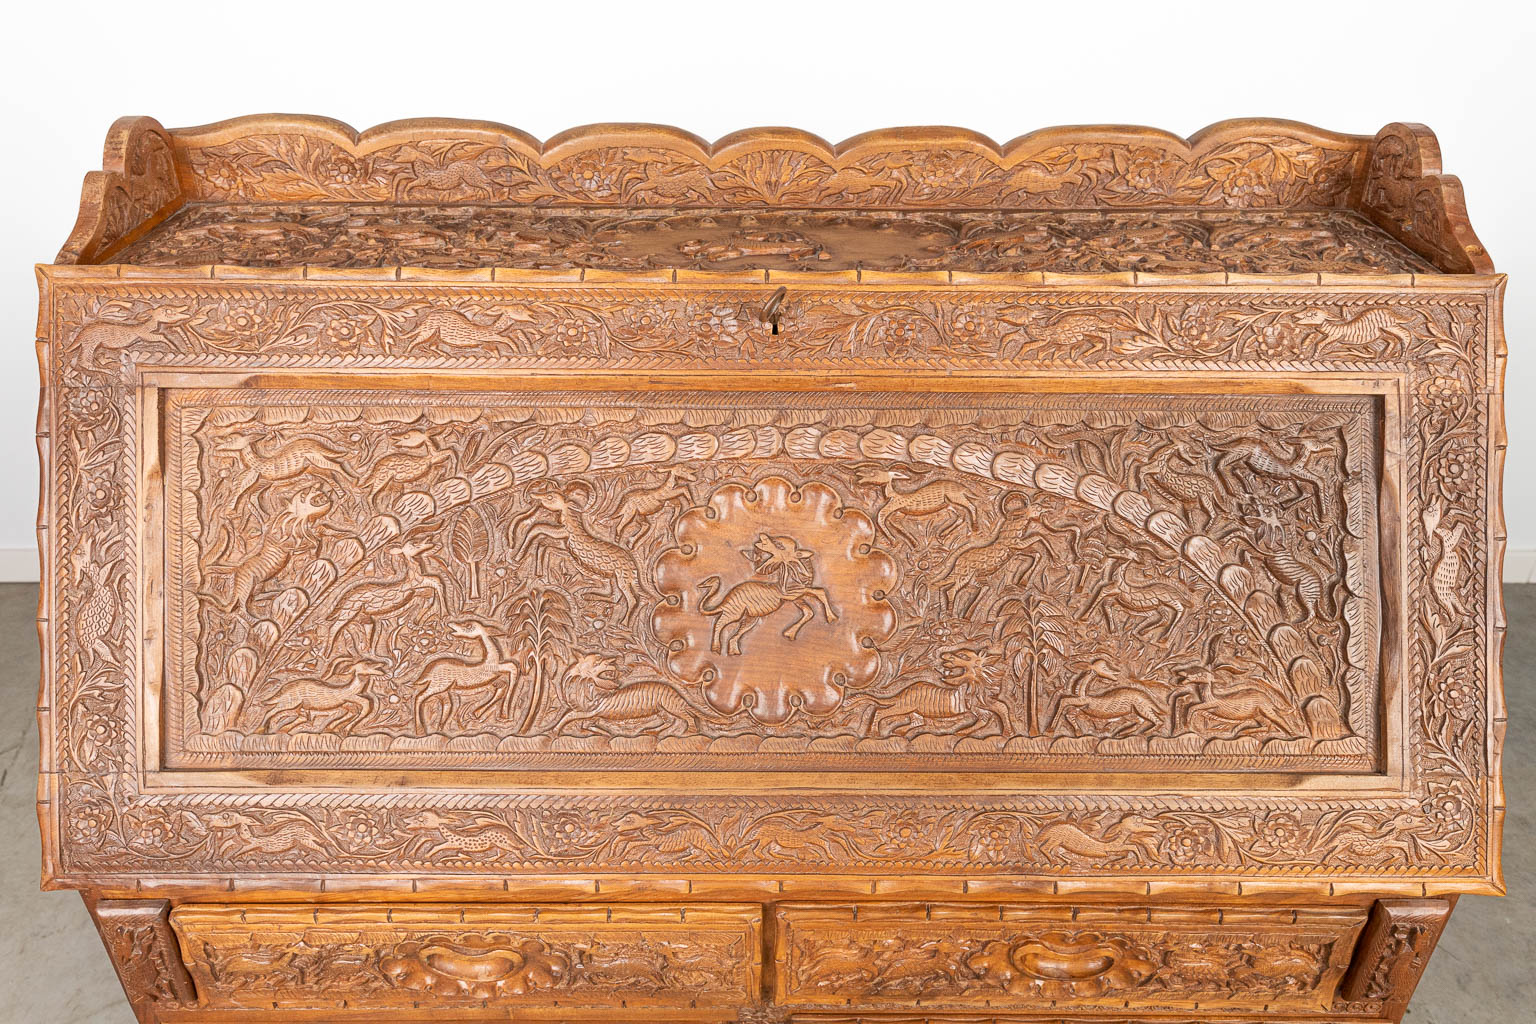 A secretaire cabinet made of ceder in Bali, Indonesia. (40 x 91 x 110cm)